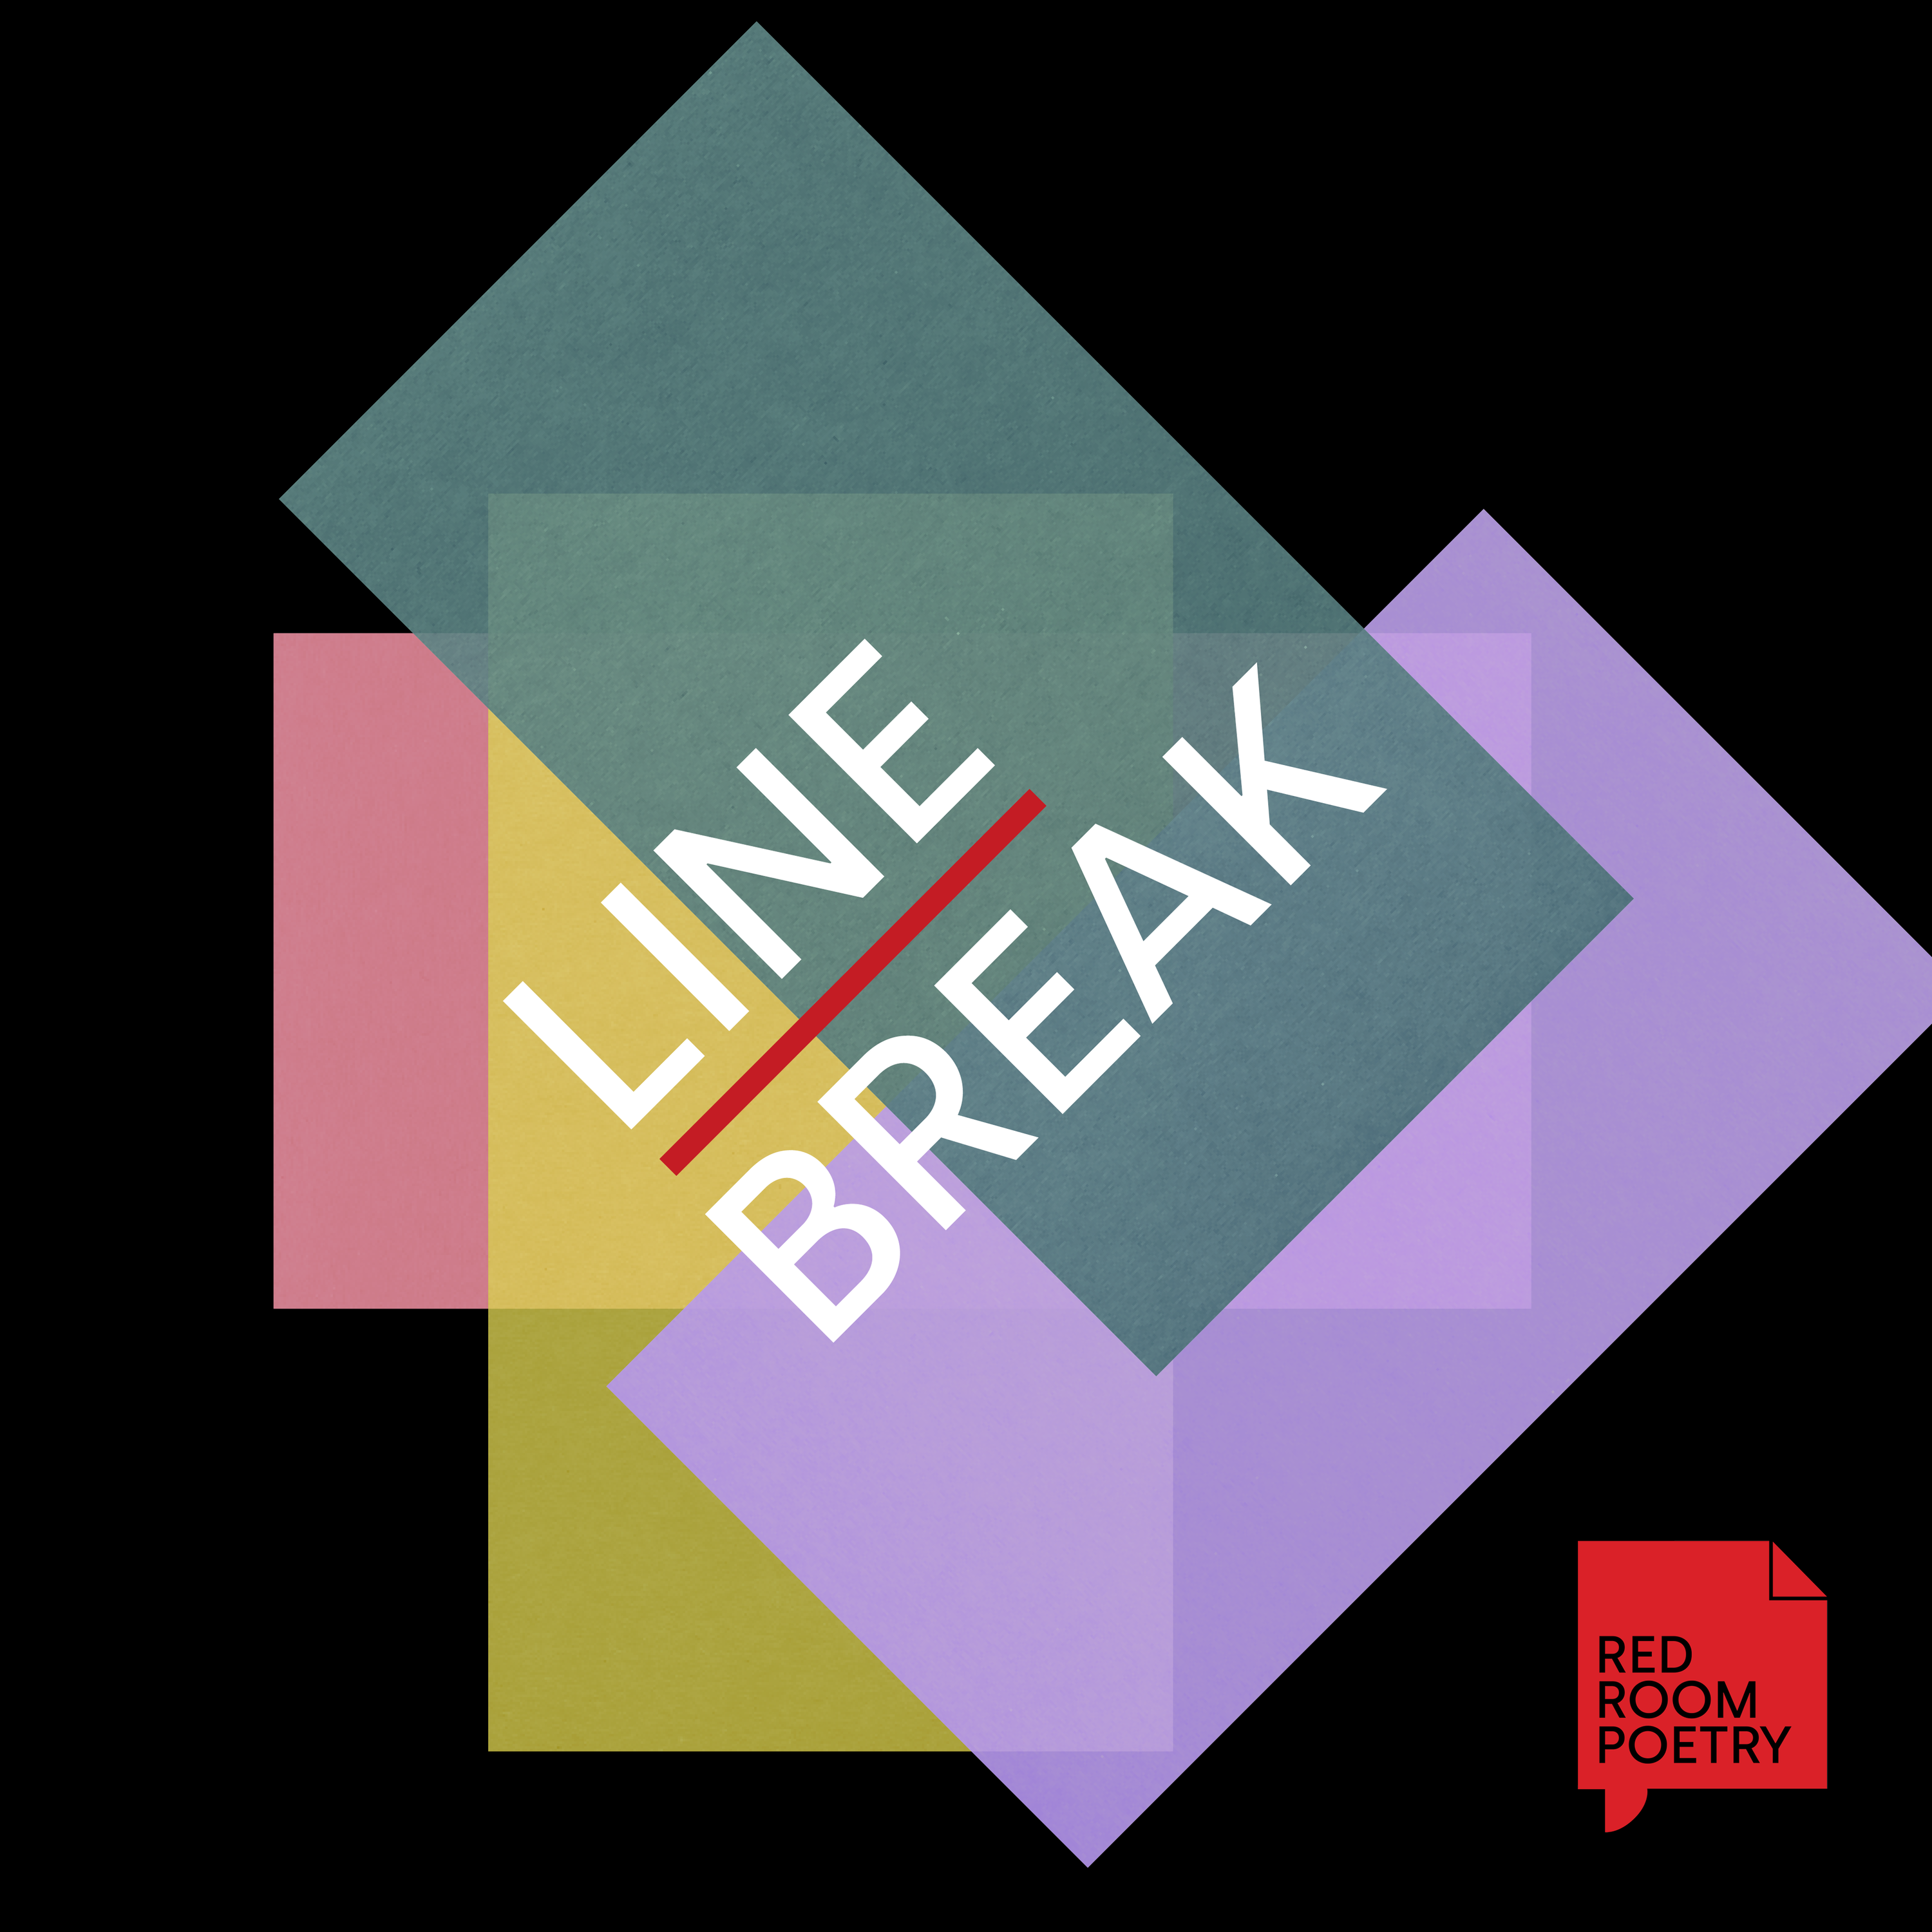 Line Break is coming soon